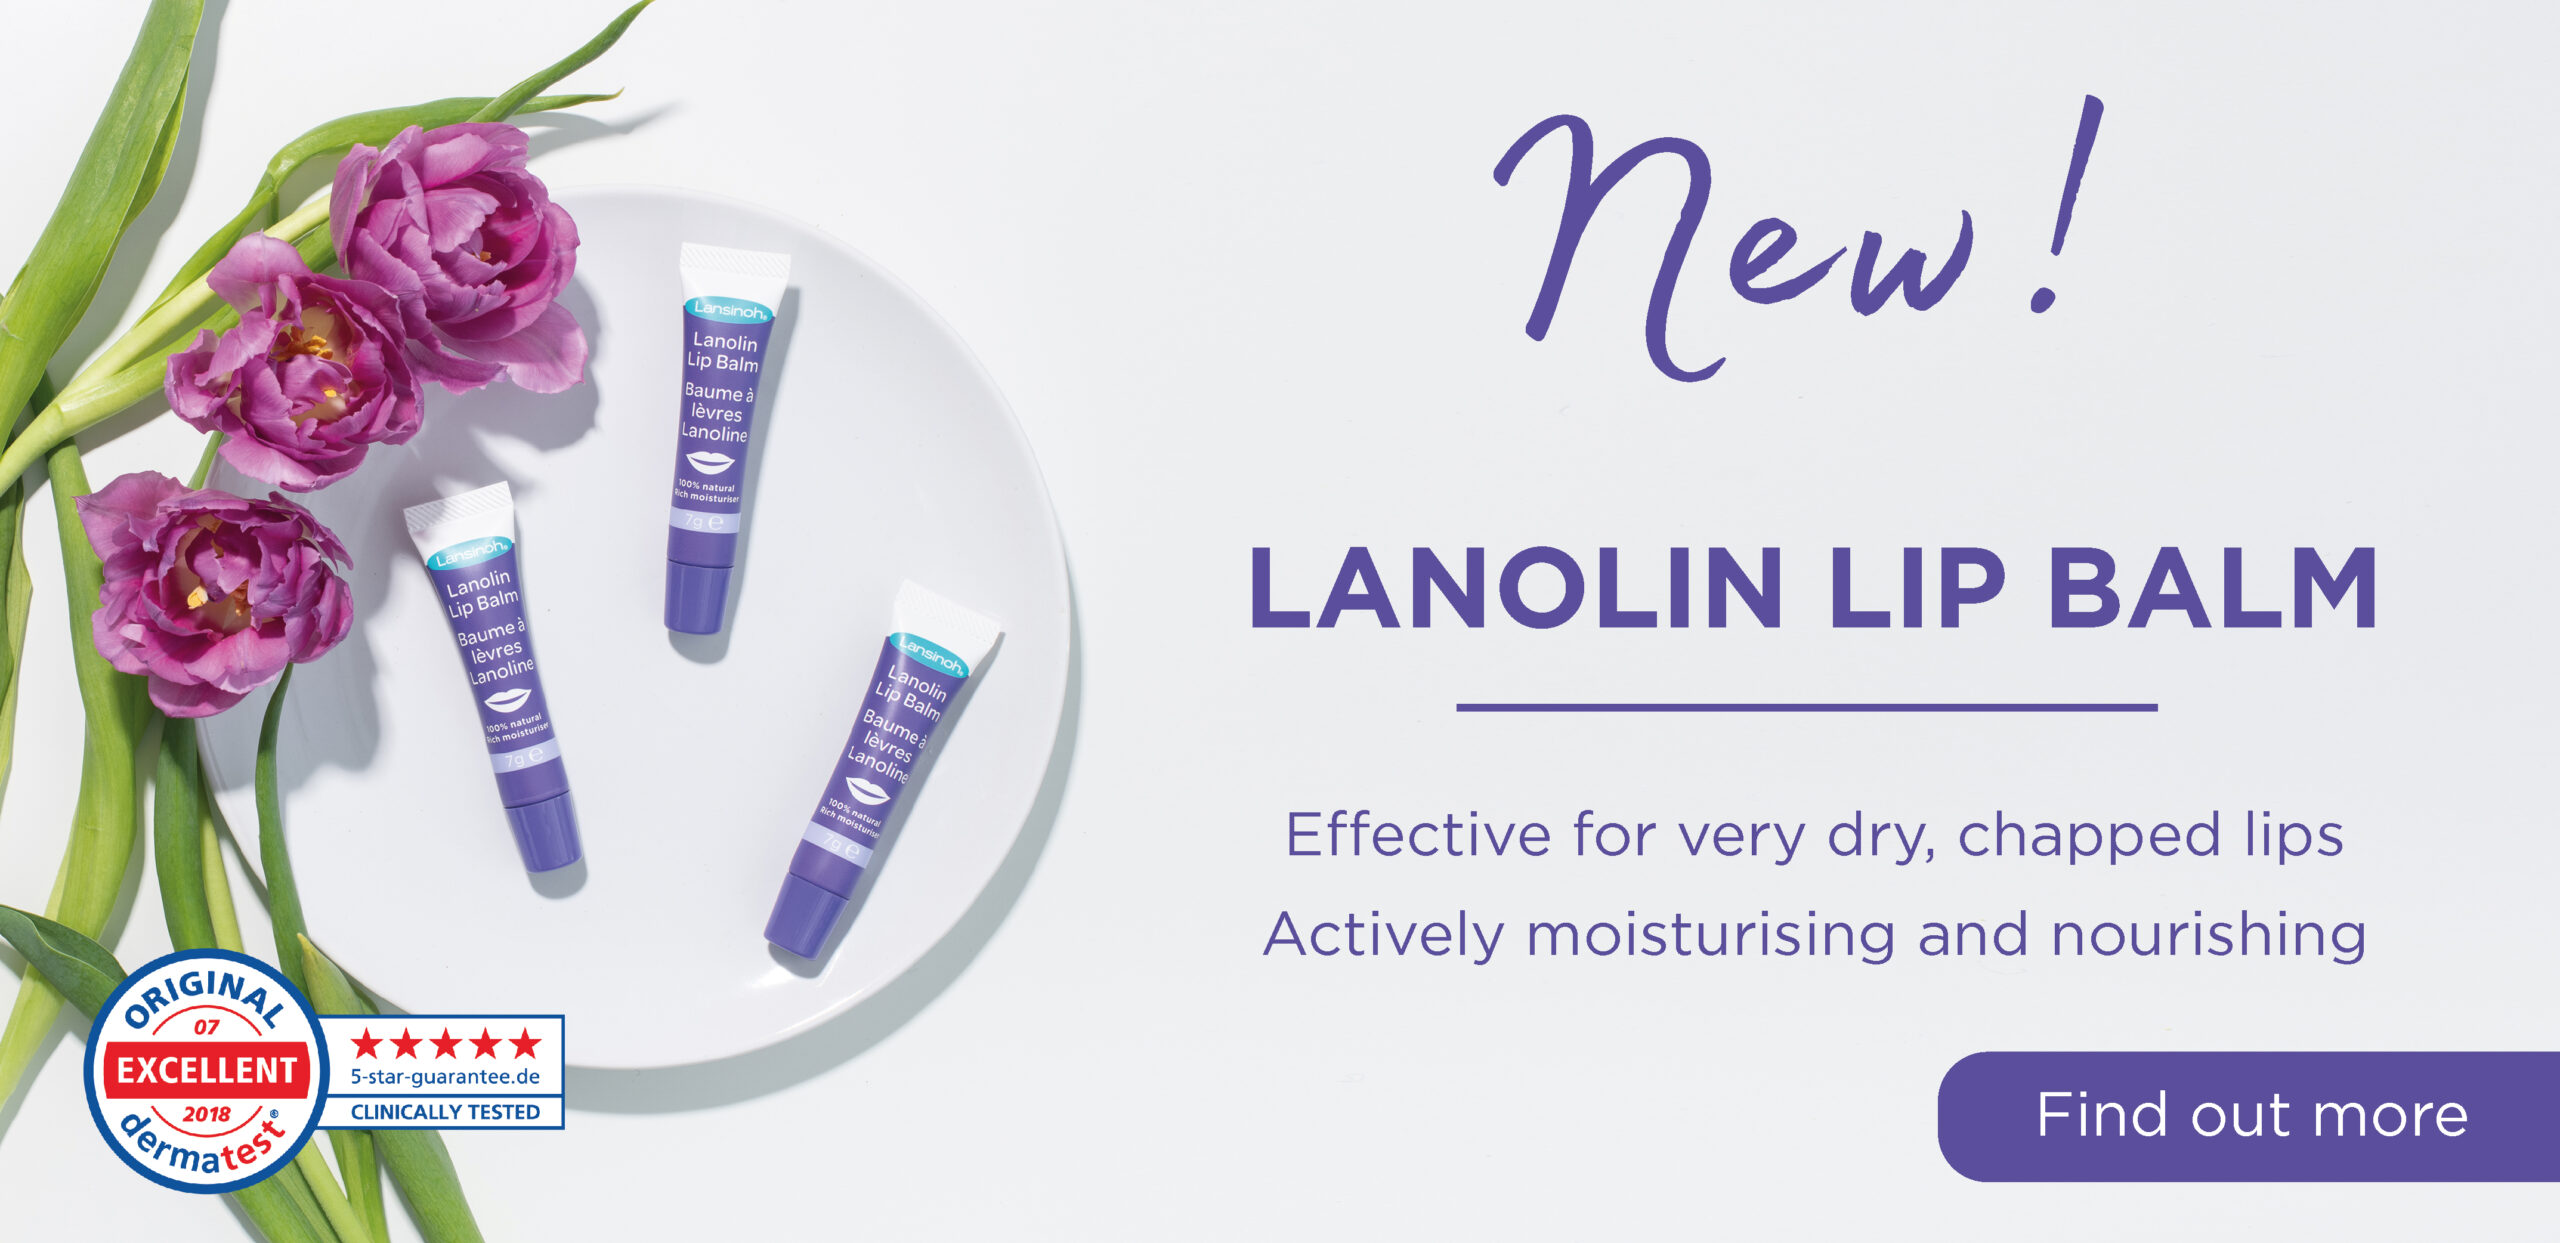 New Lanolin Lip Balm